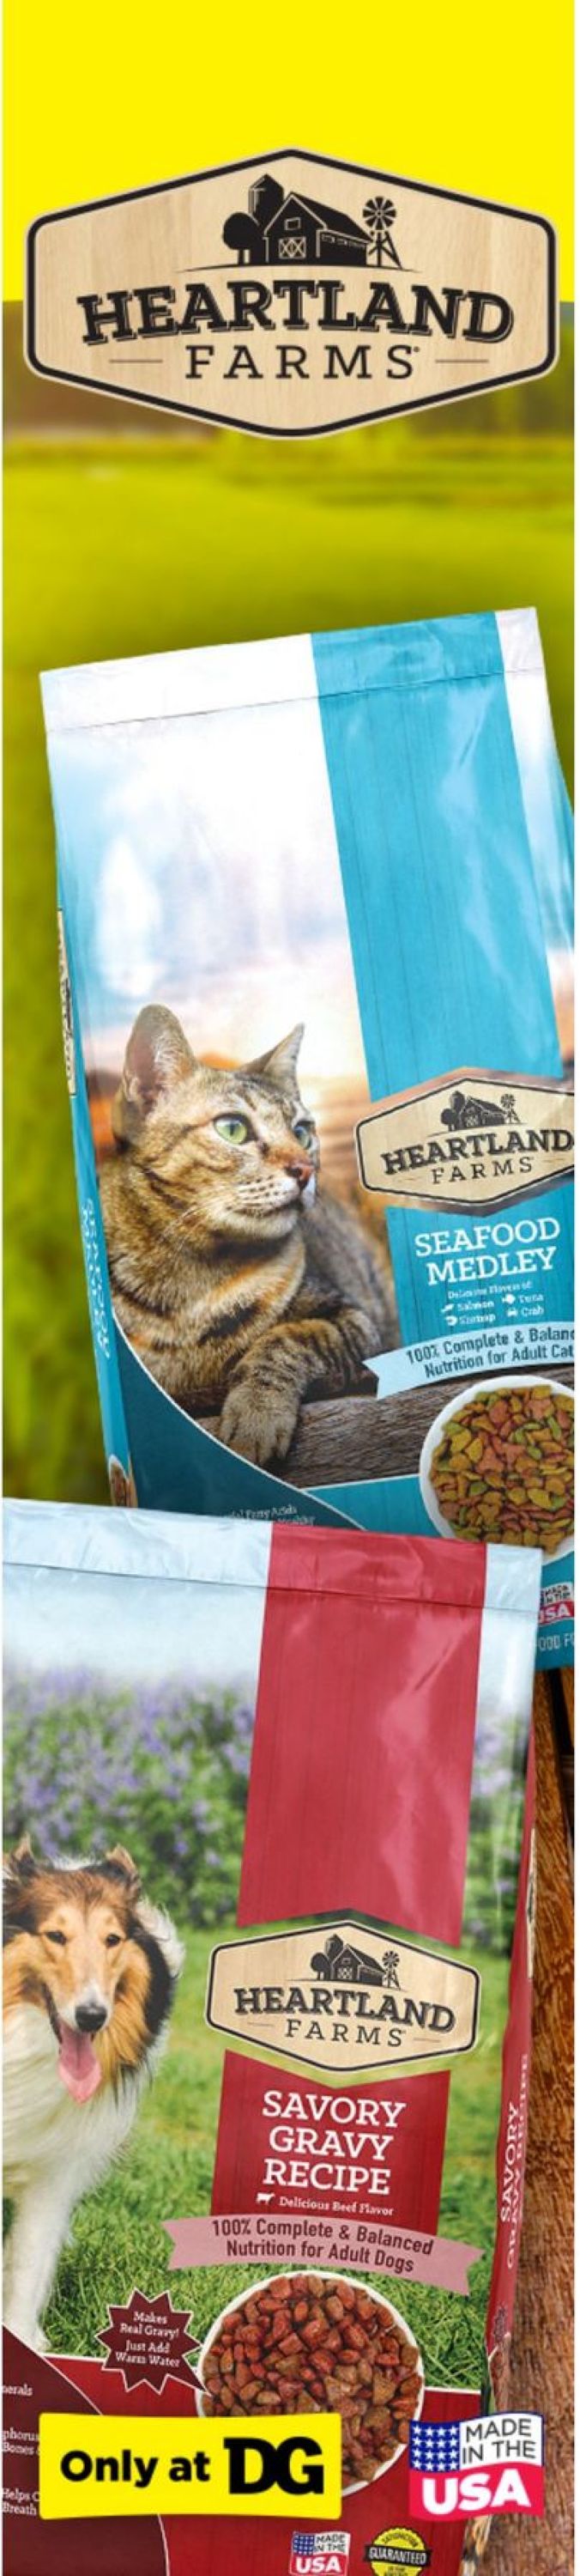 heartland farms cat food